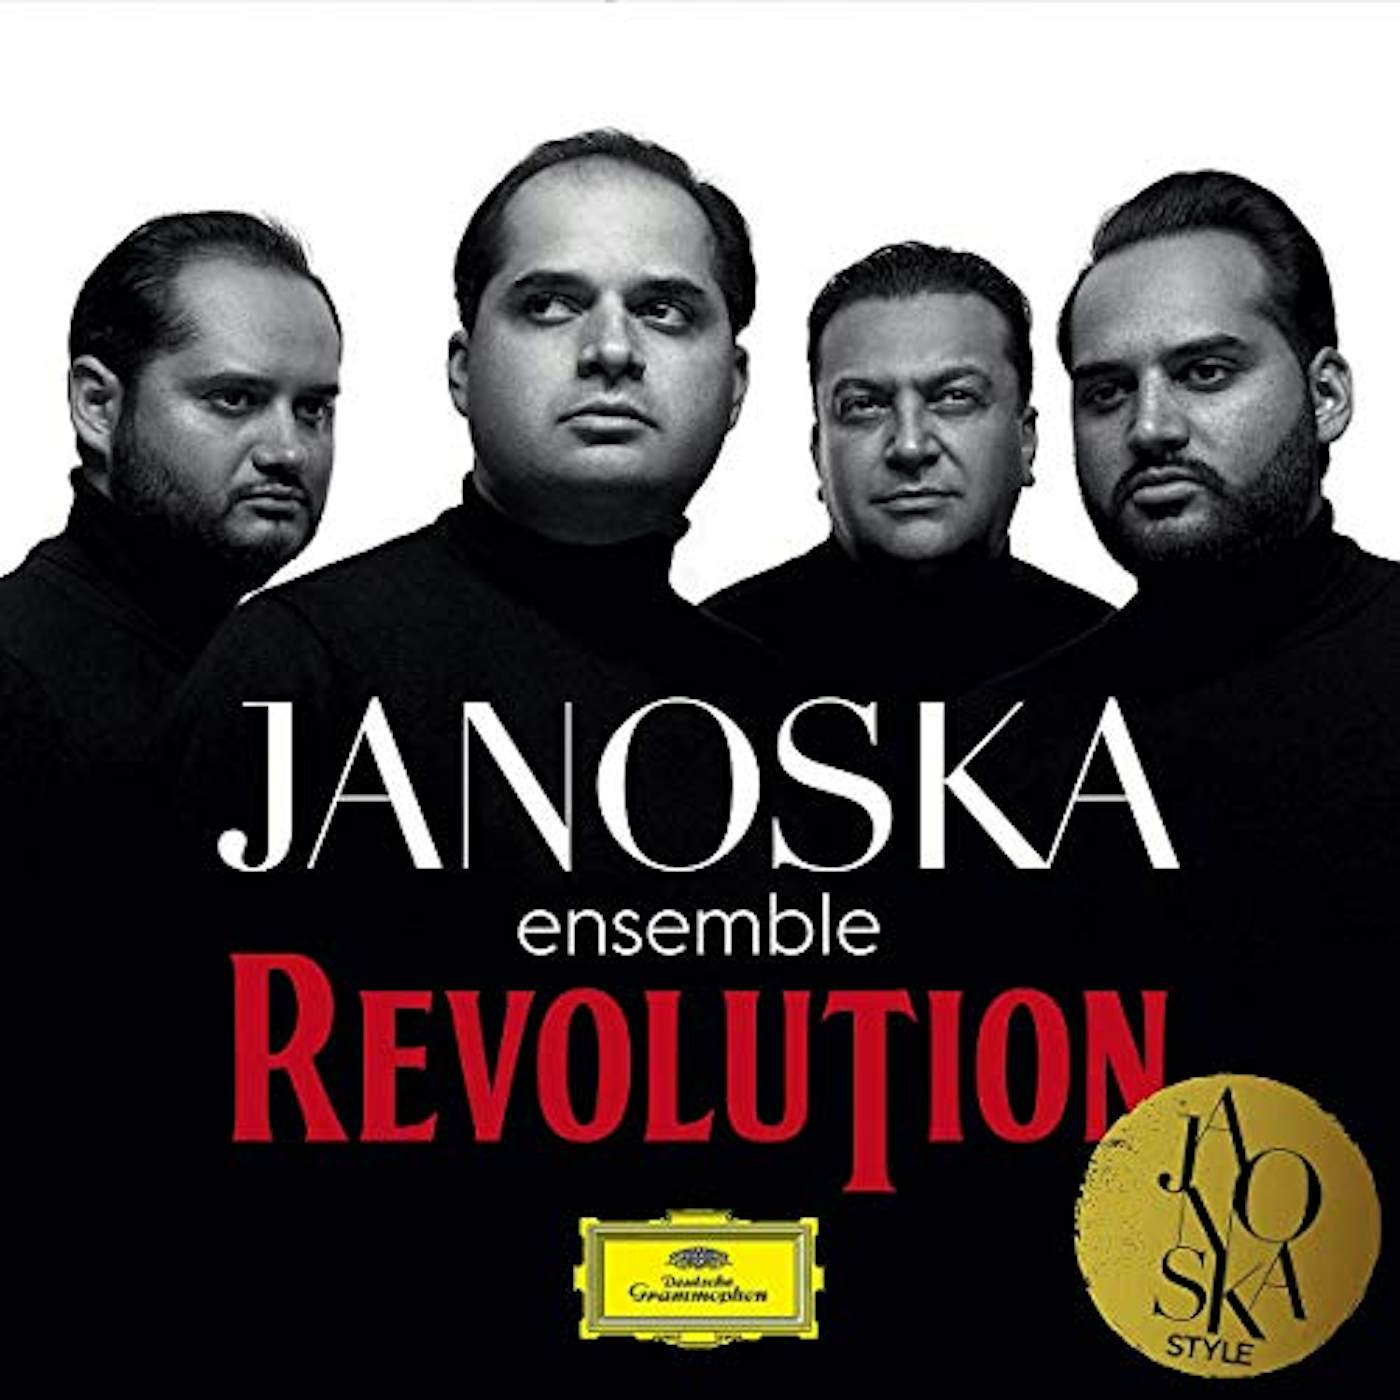 Janoska Ensemble REVOLUTION CD